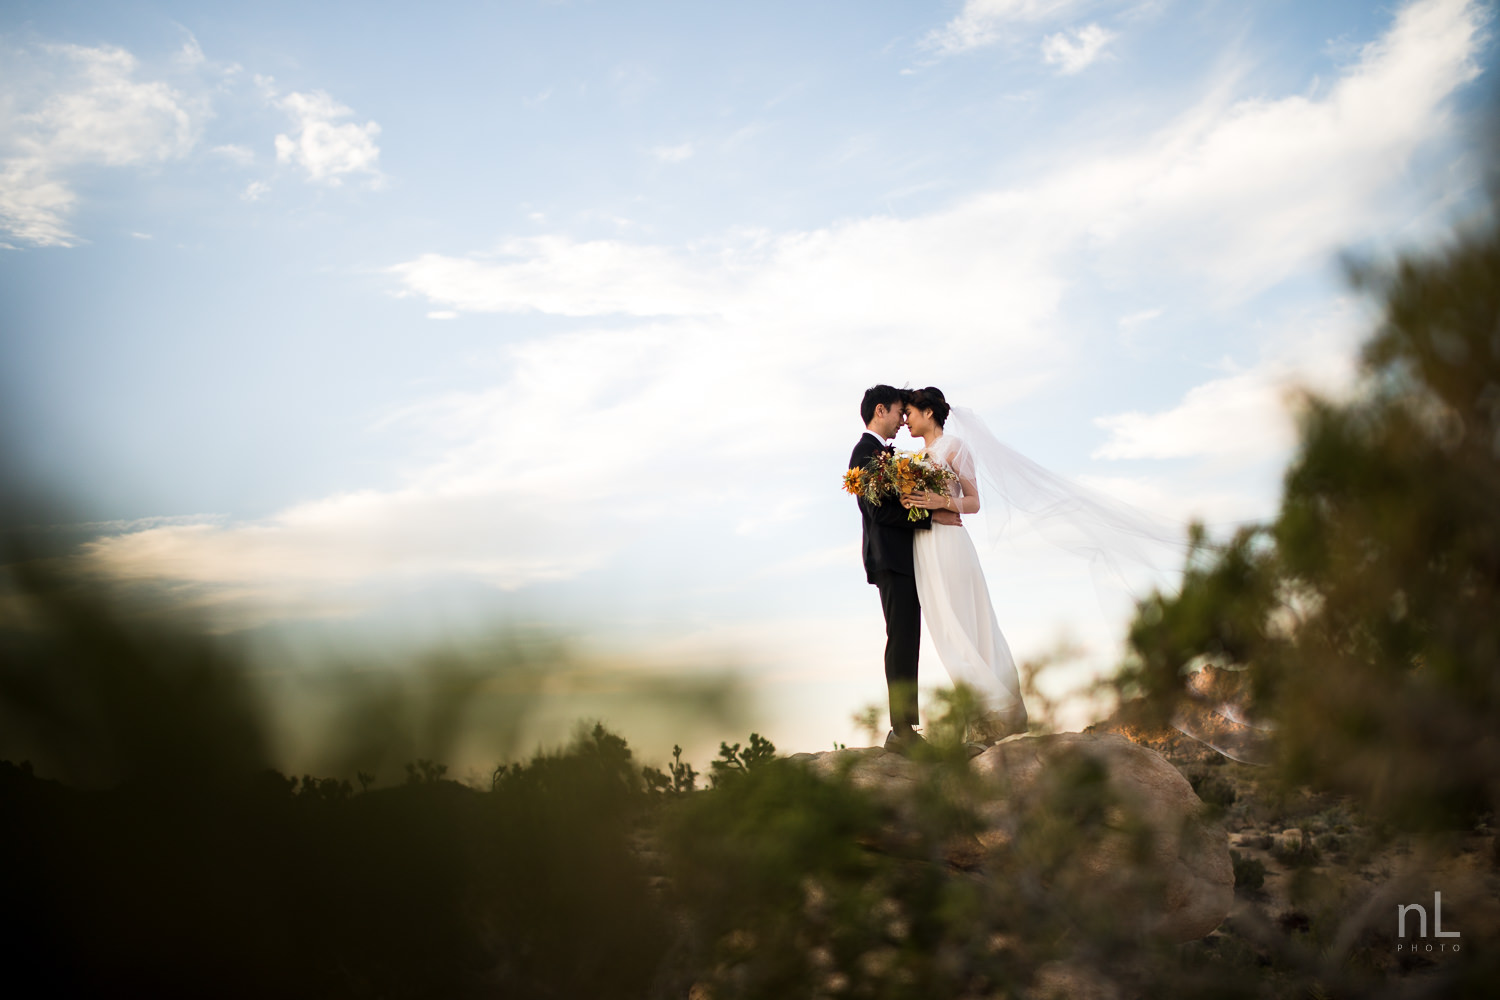 joshua-tree-engagement-wedding-elopement-photography-stylized-photoshoot-epic-environmental-portrait-bride-and-groom-veil-flowing-wind